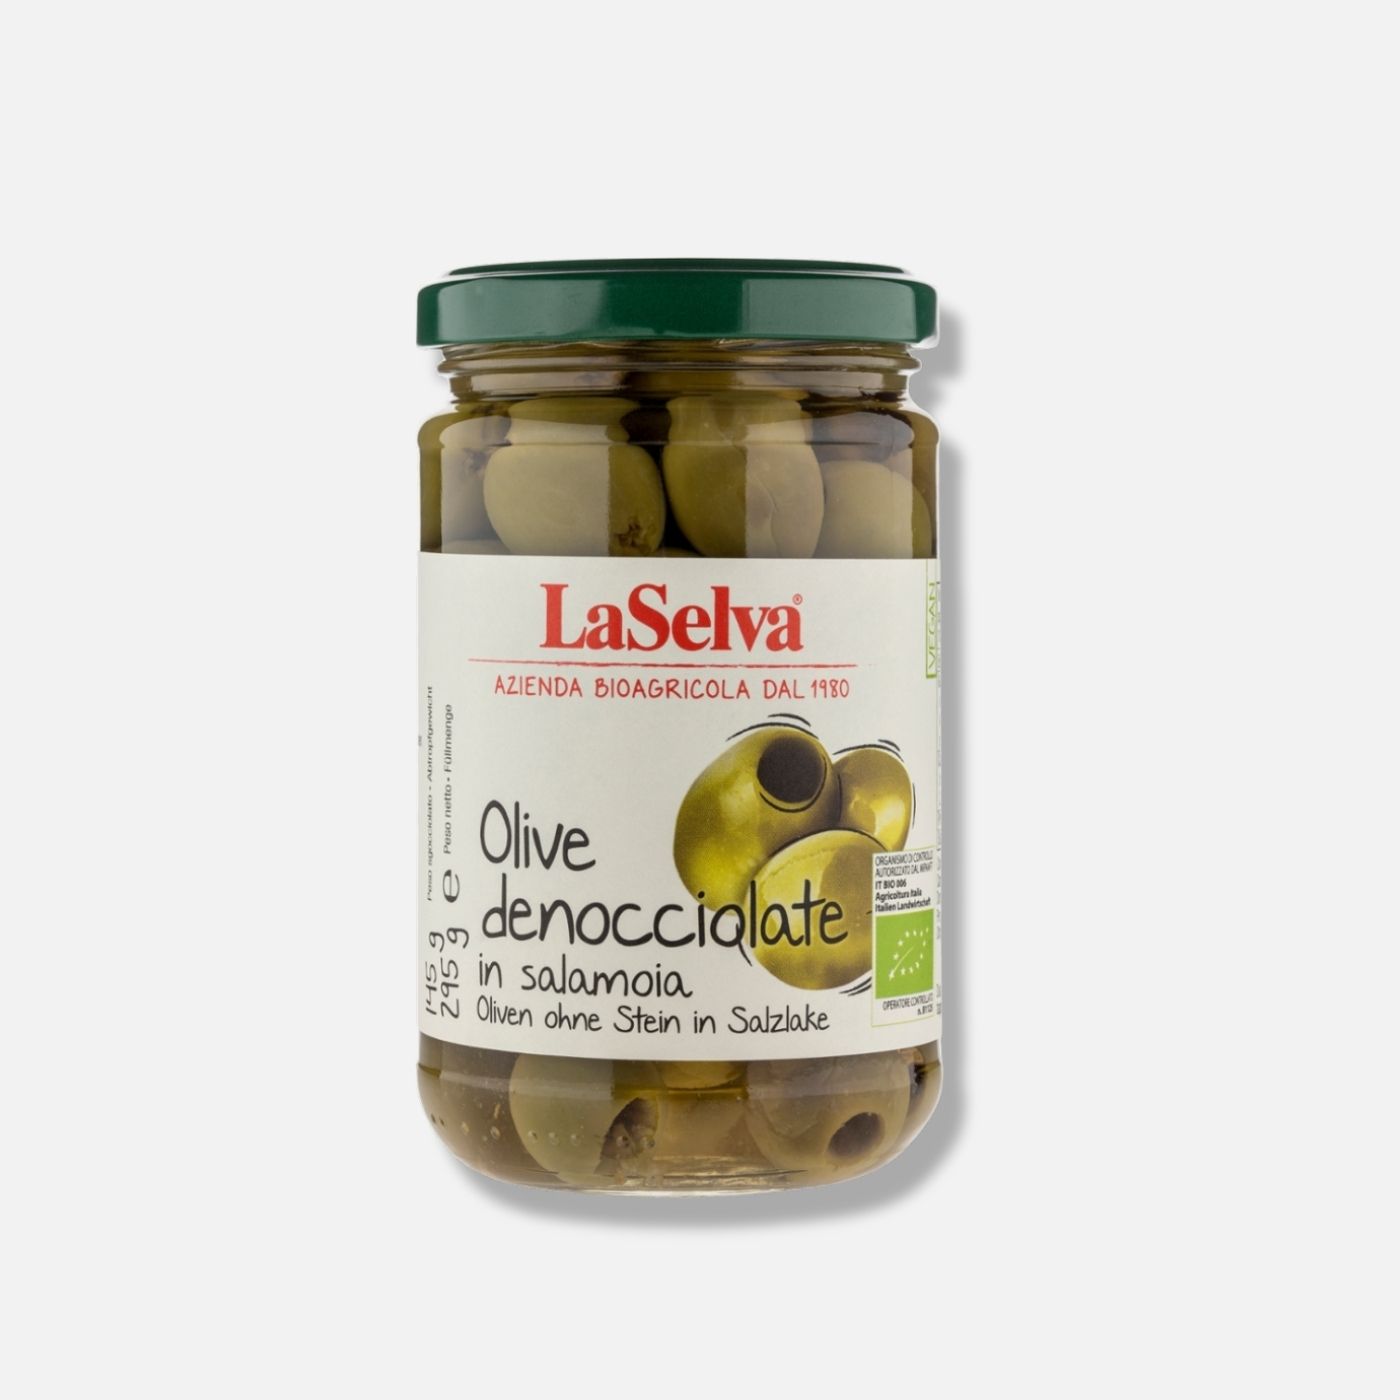 Bio Oliven ohne Stein in Salzlake Olive - denocciolate in salamoia